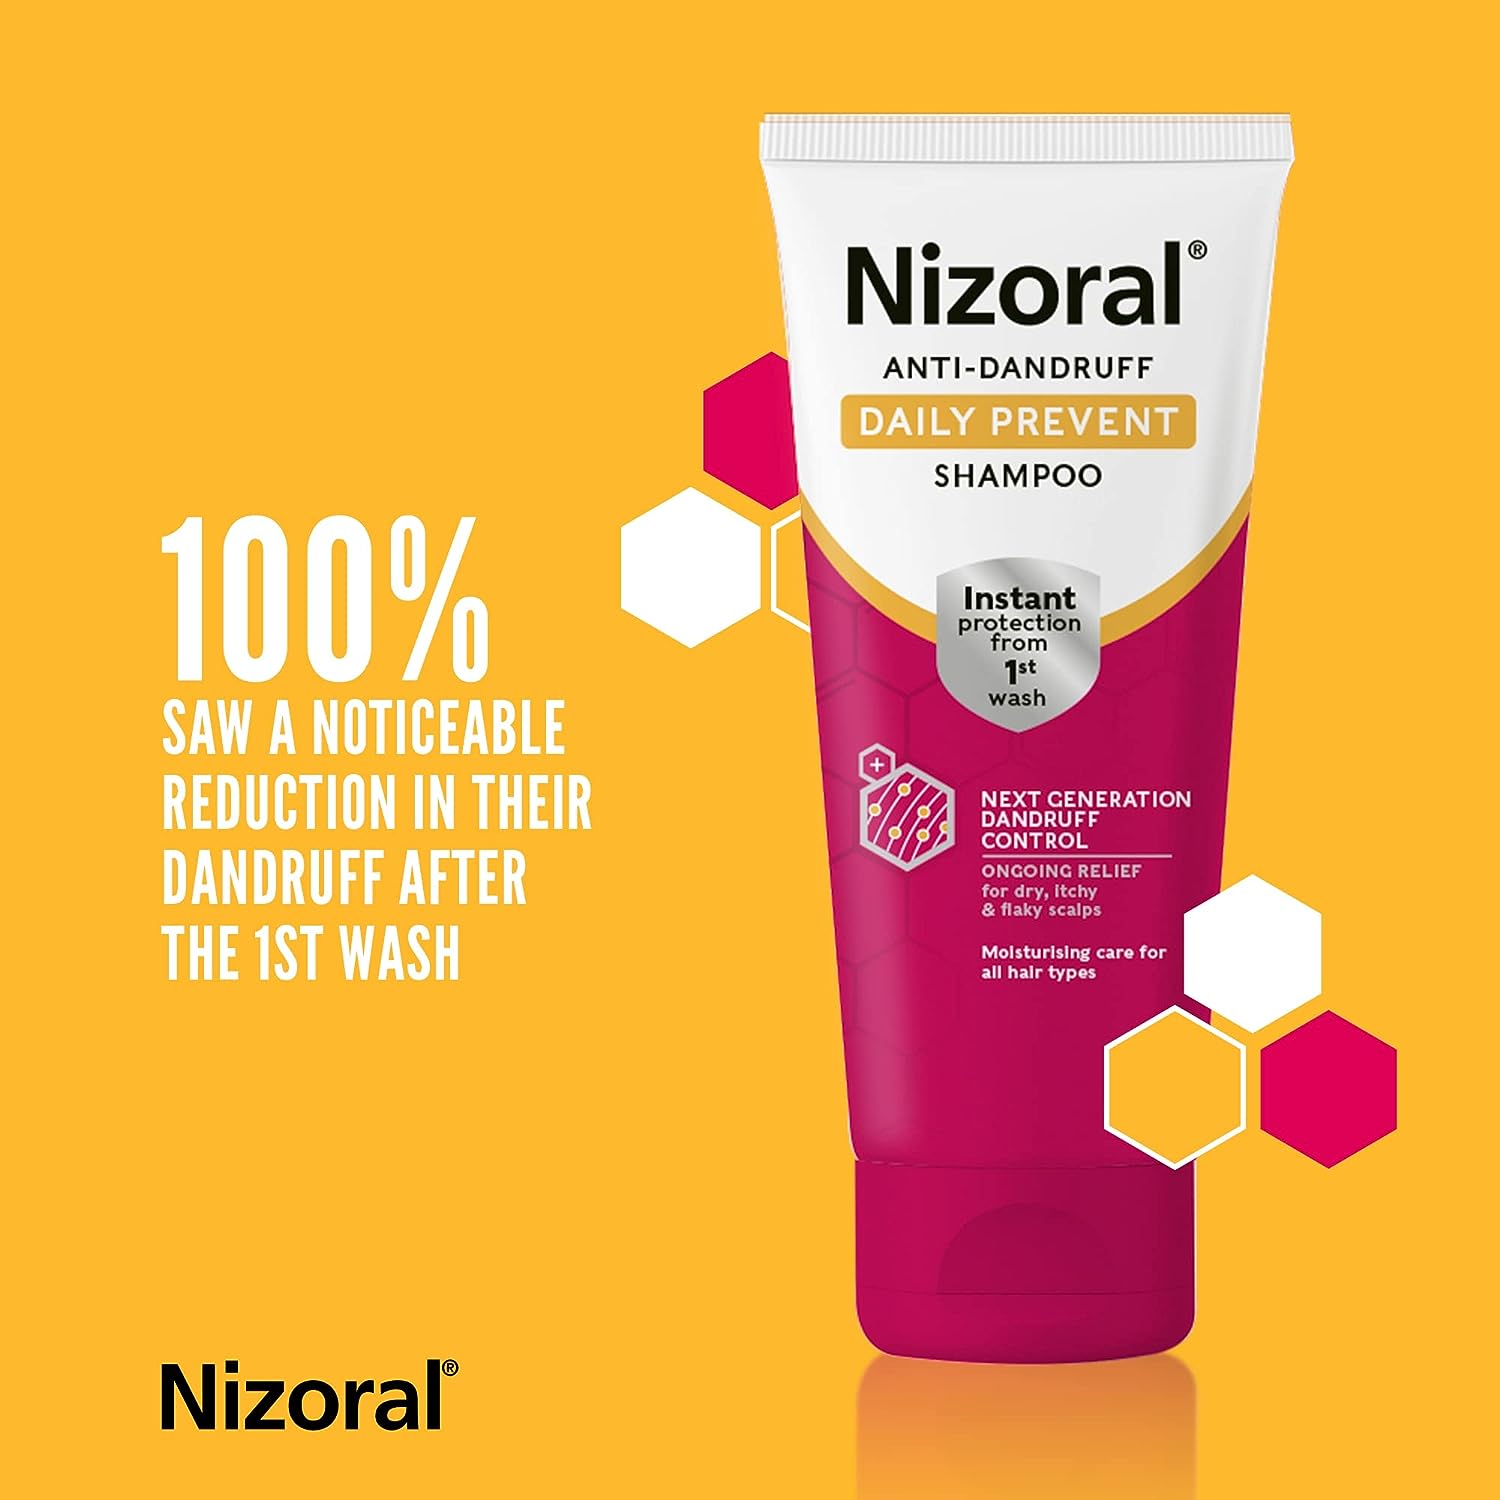 Nizoral Daily Prevent Shampoo 200ml Stops dandruff returning from the 1st wash 